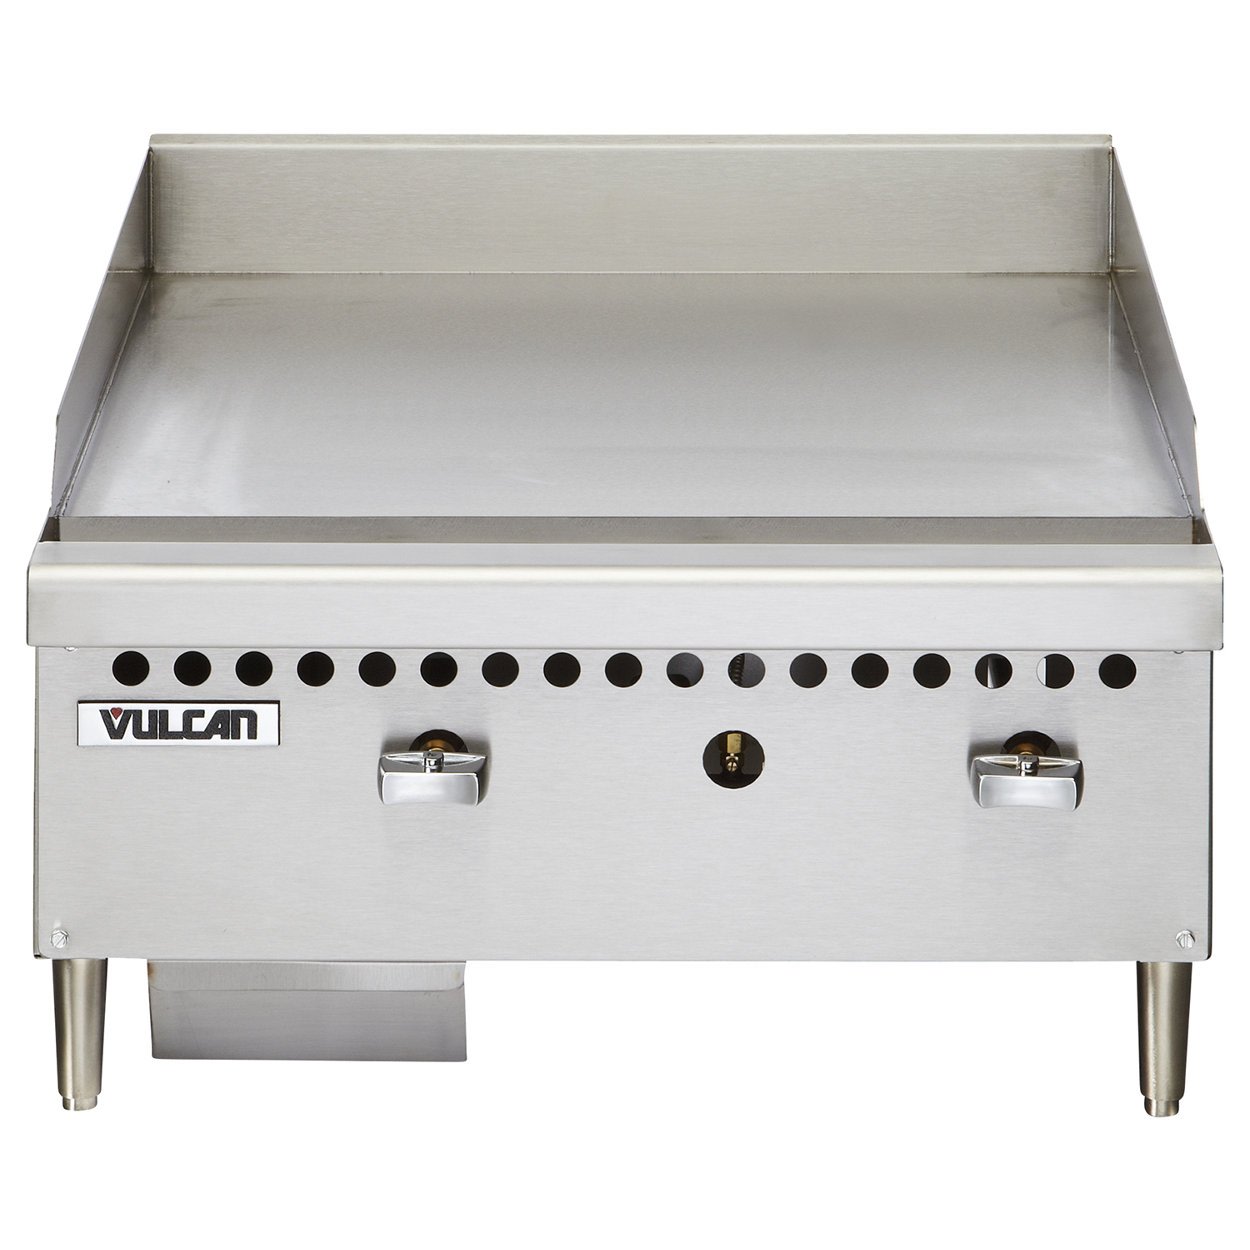 Vulcan Restaurant Series Countertop 24” Natural Gas Griddle - VCRG24-M